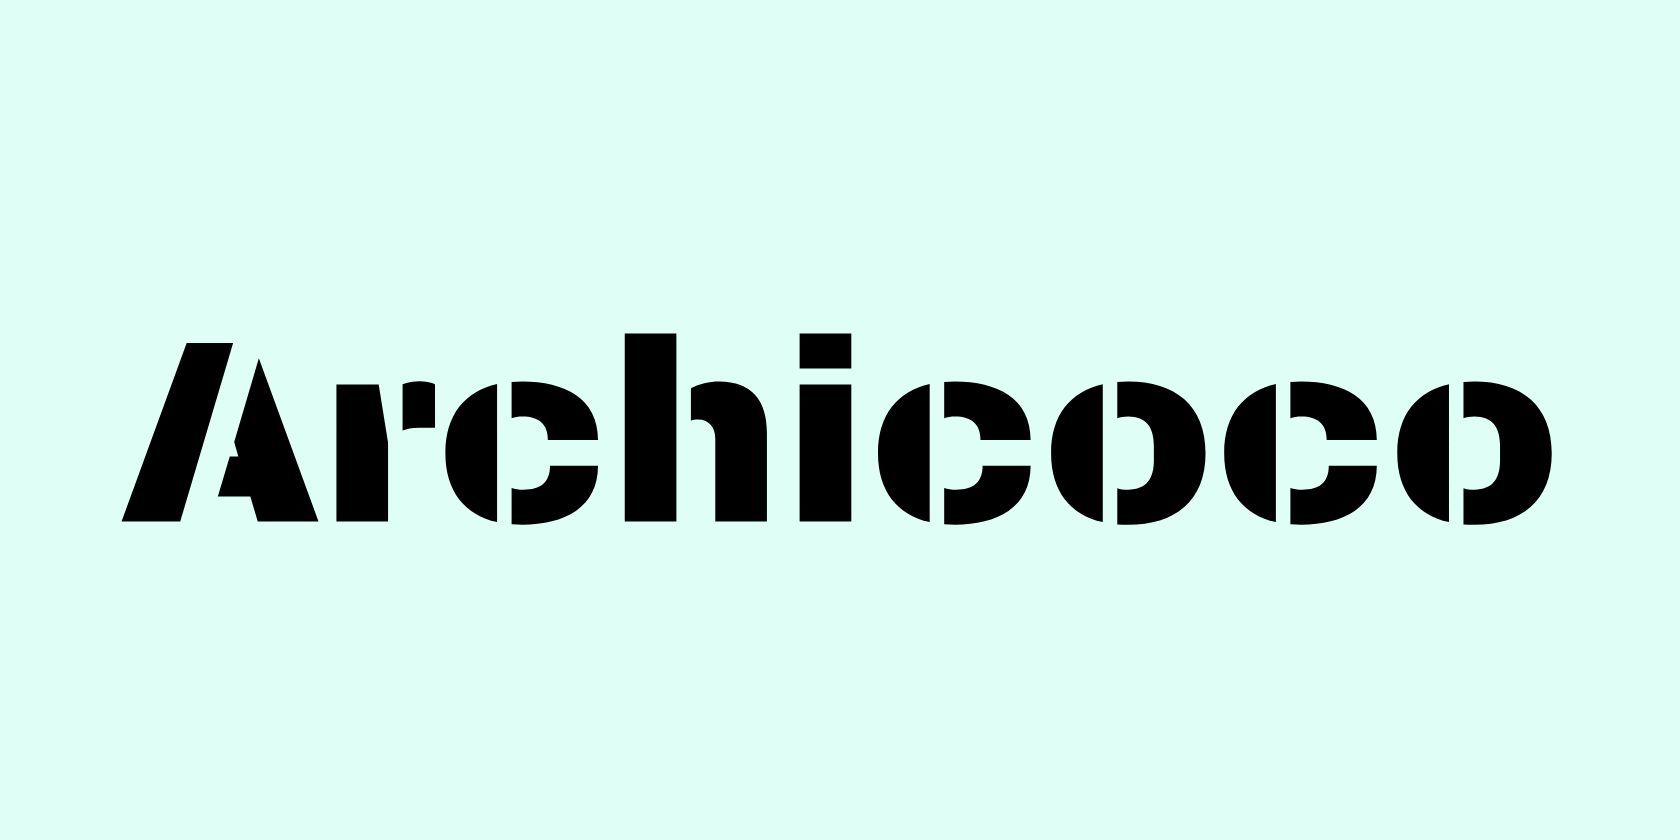  Canva font example Archicoco